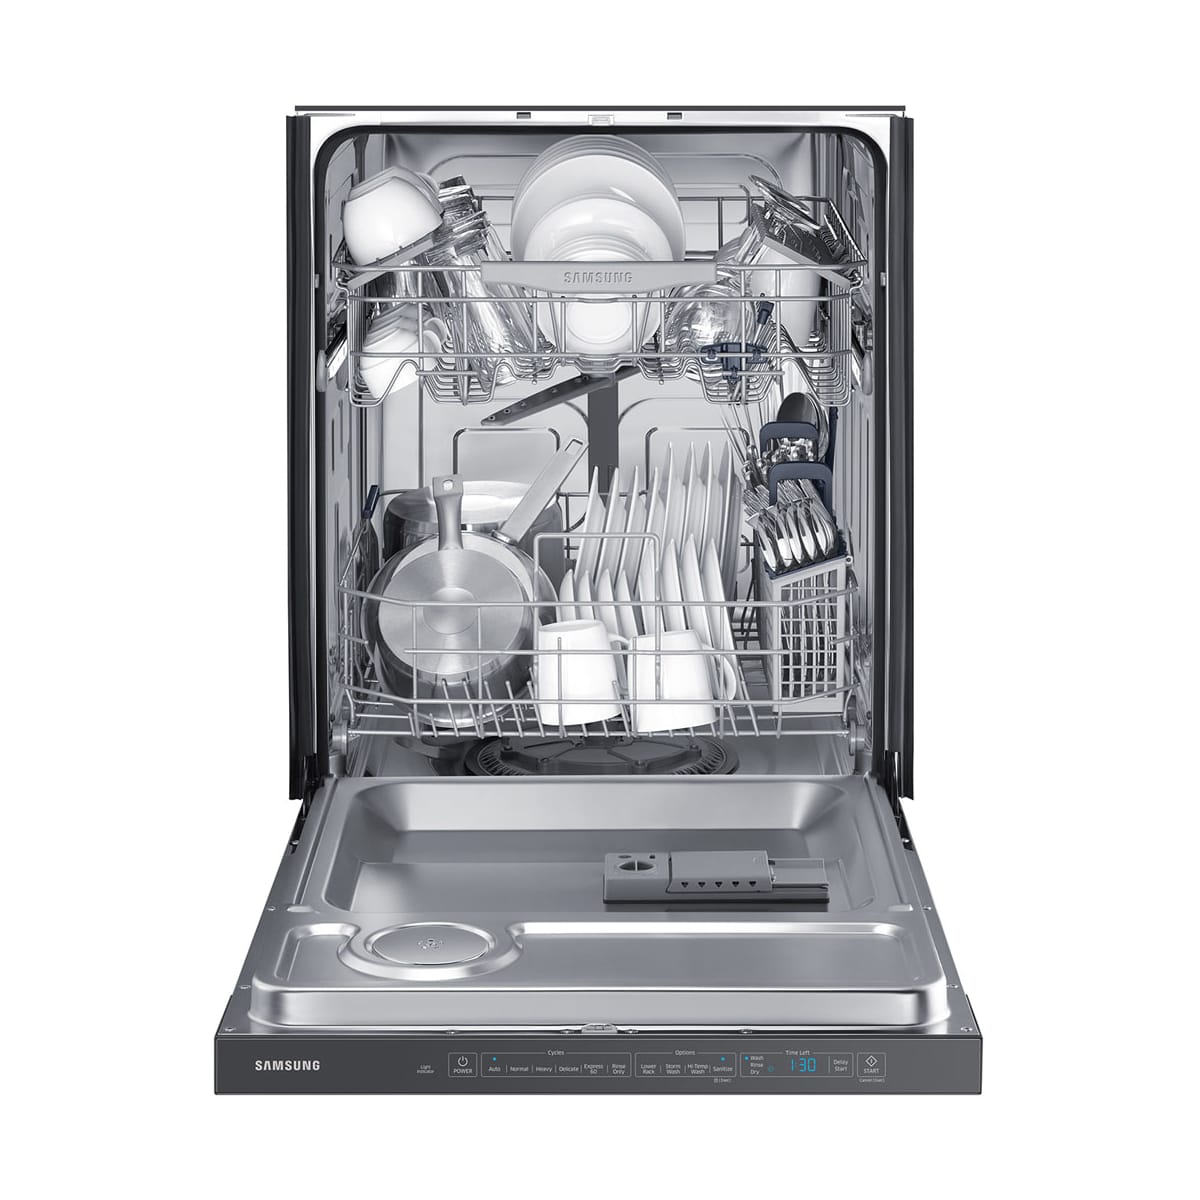 Samsung Dishwasher Dishwashers - DW80K5050U